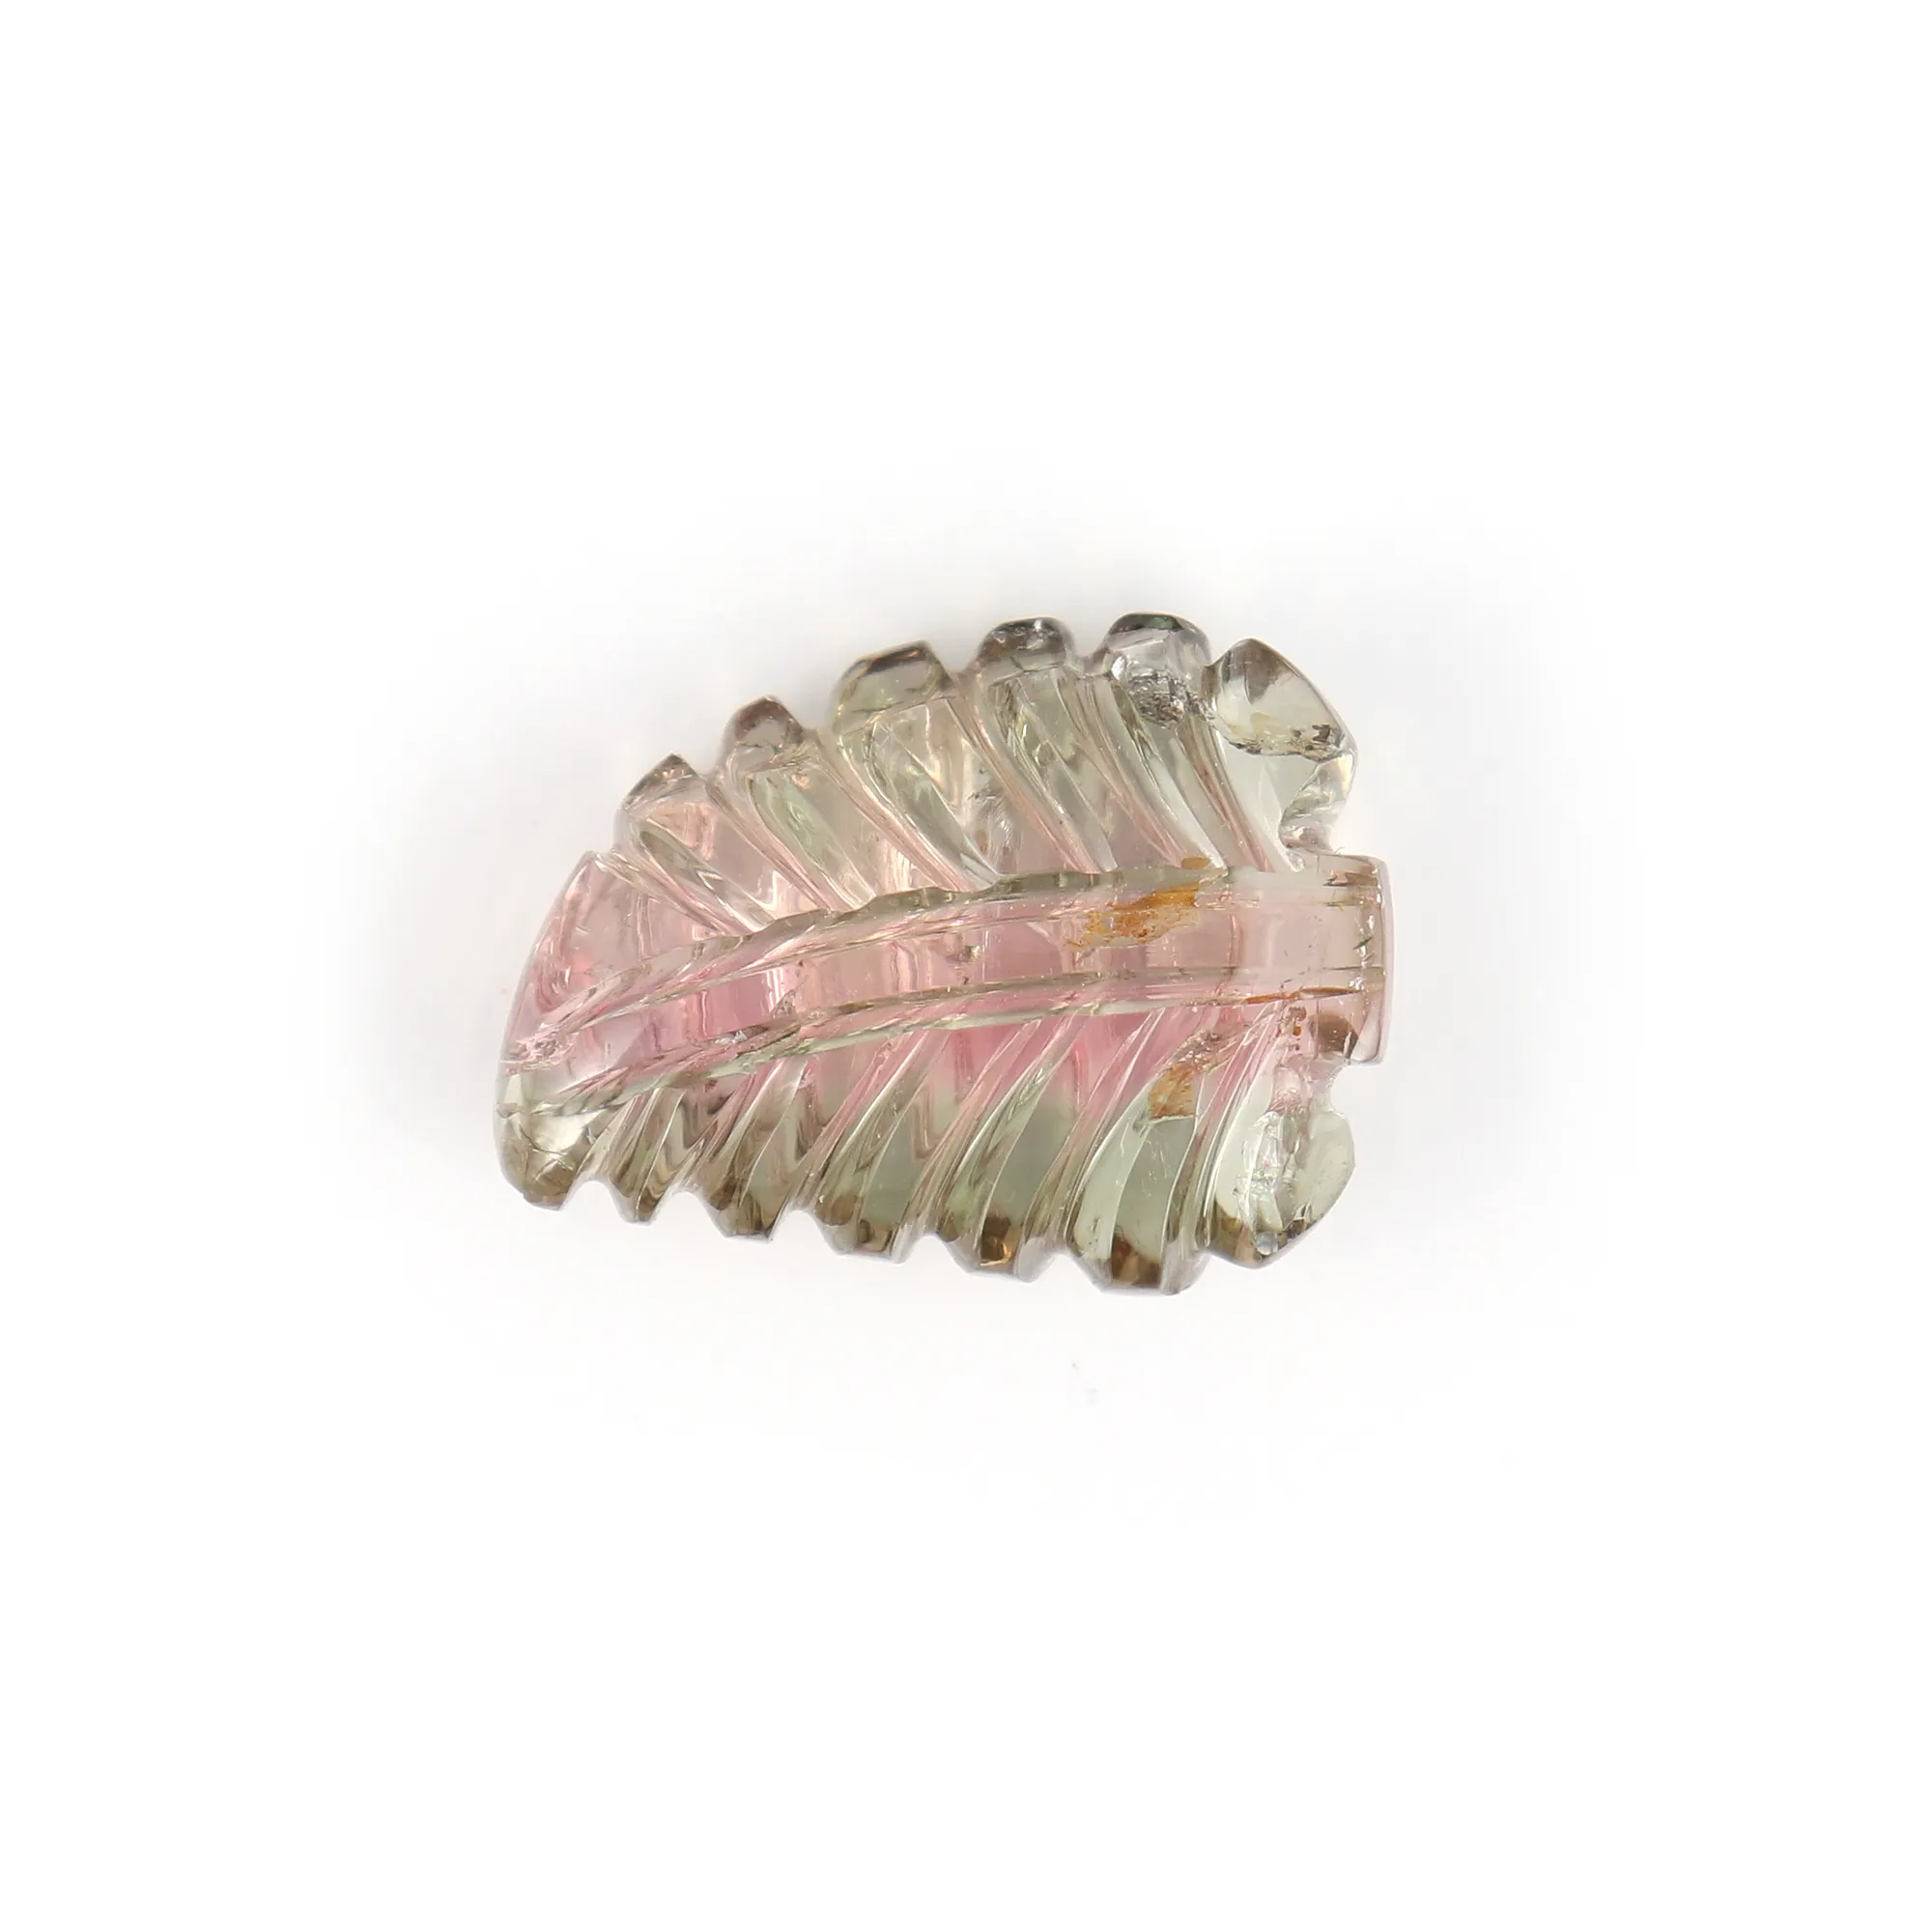 Wholesale Sale BioTourmaline Stone Leaf Shaped Natural Loose Gemstone Price Per Carat Top Quality Jewelry Making Free Size Stone